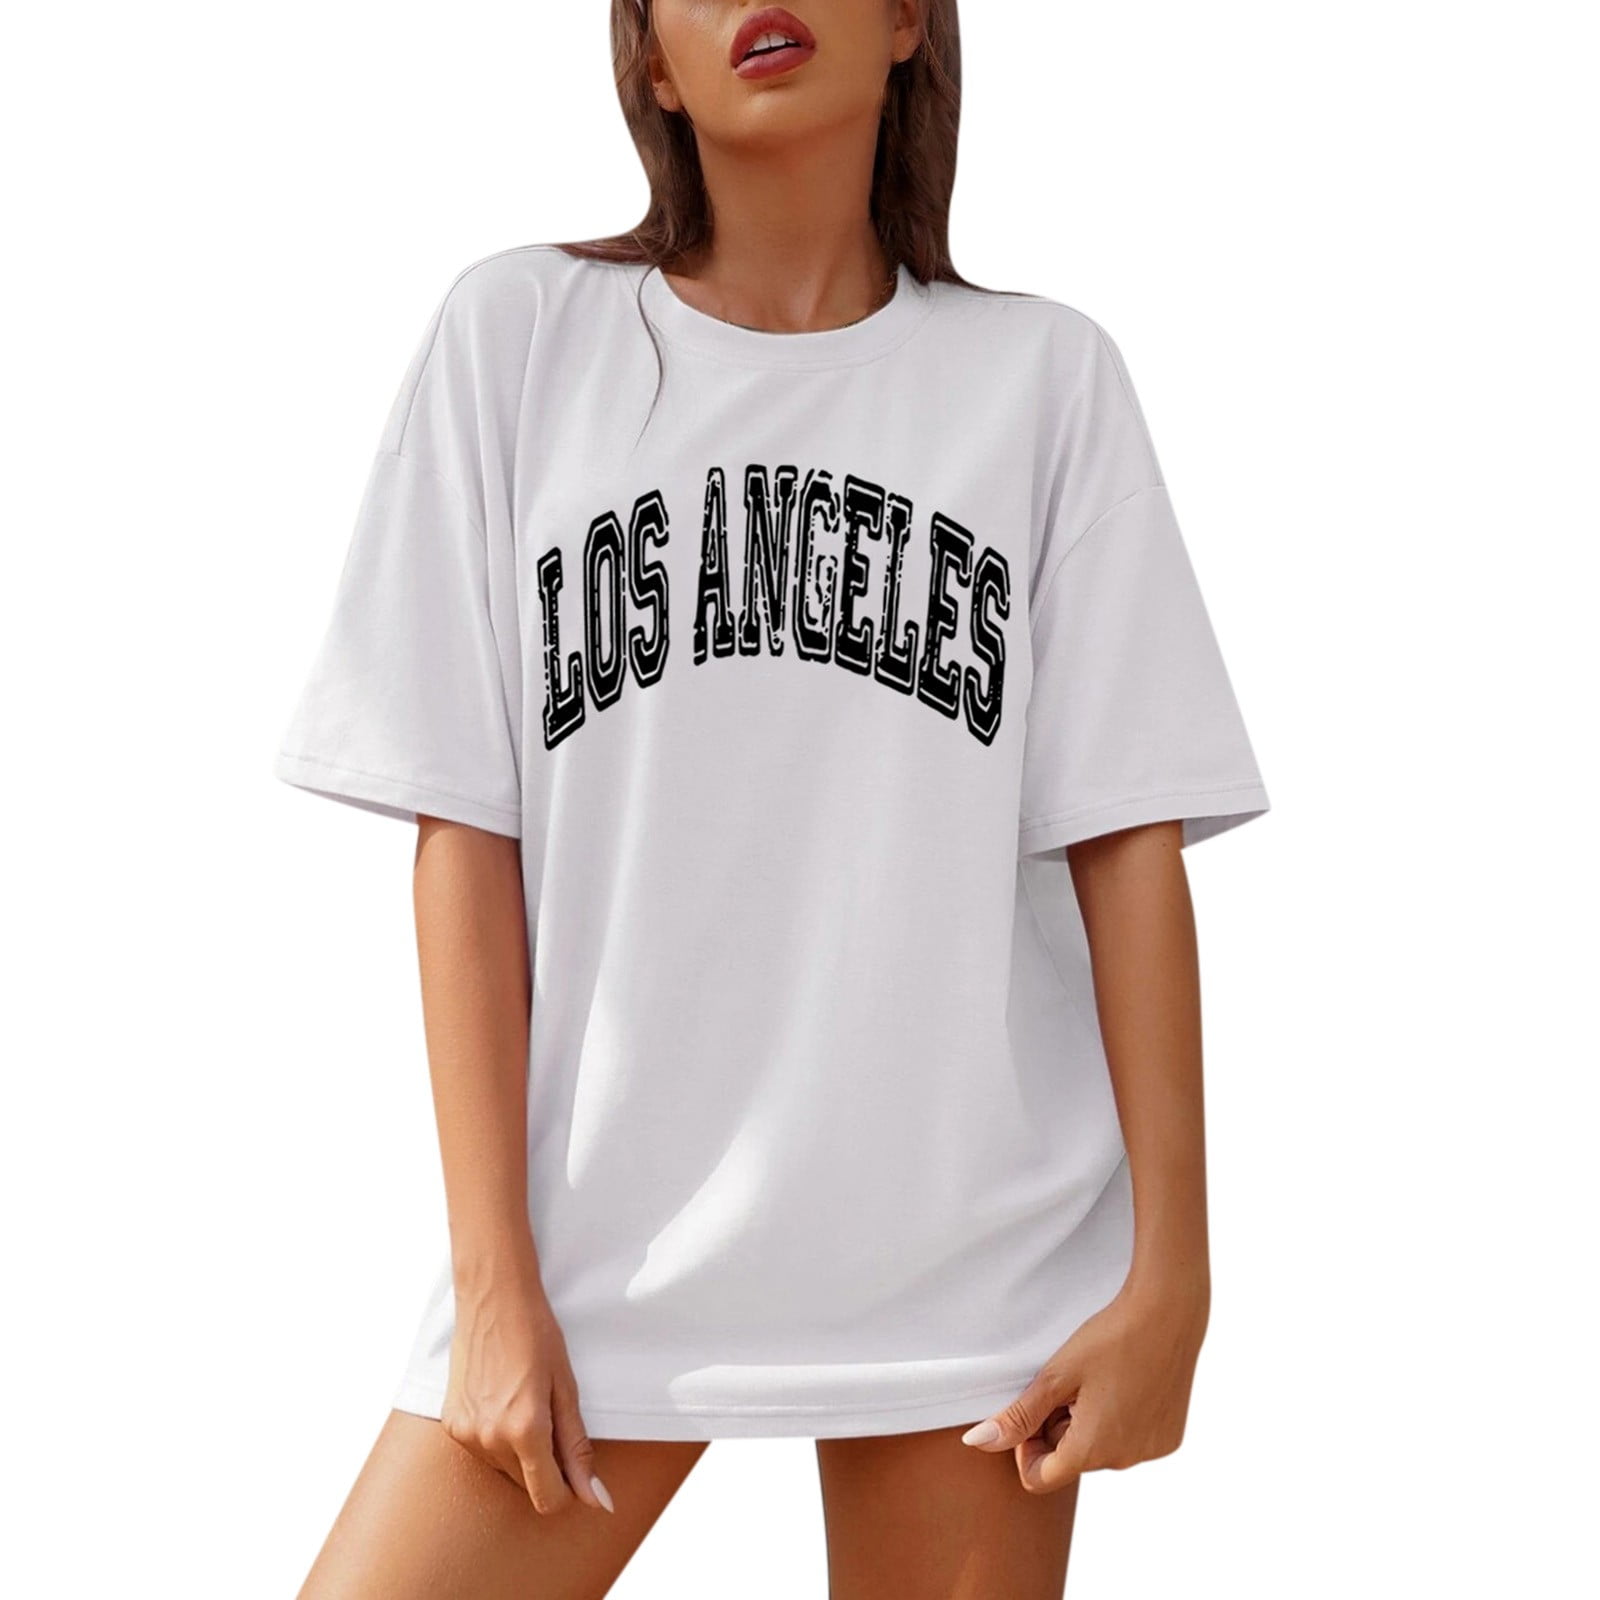 Oversized T-shirt - Gray-black/Los Angeles - Ladies